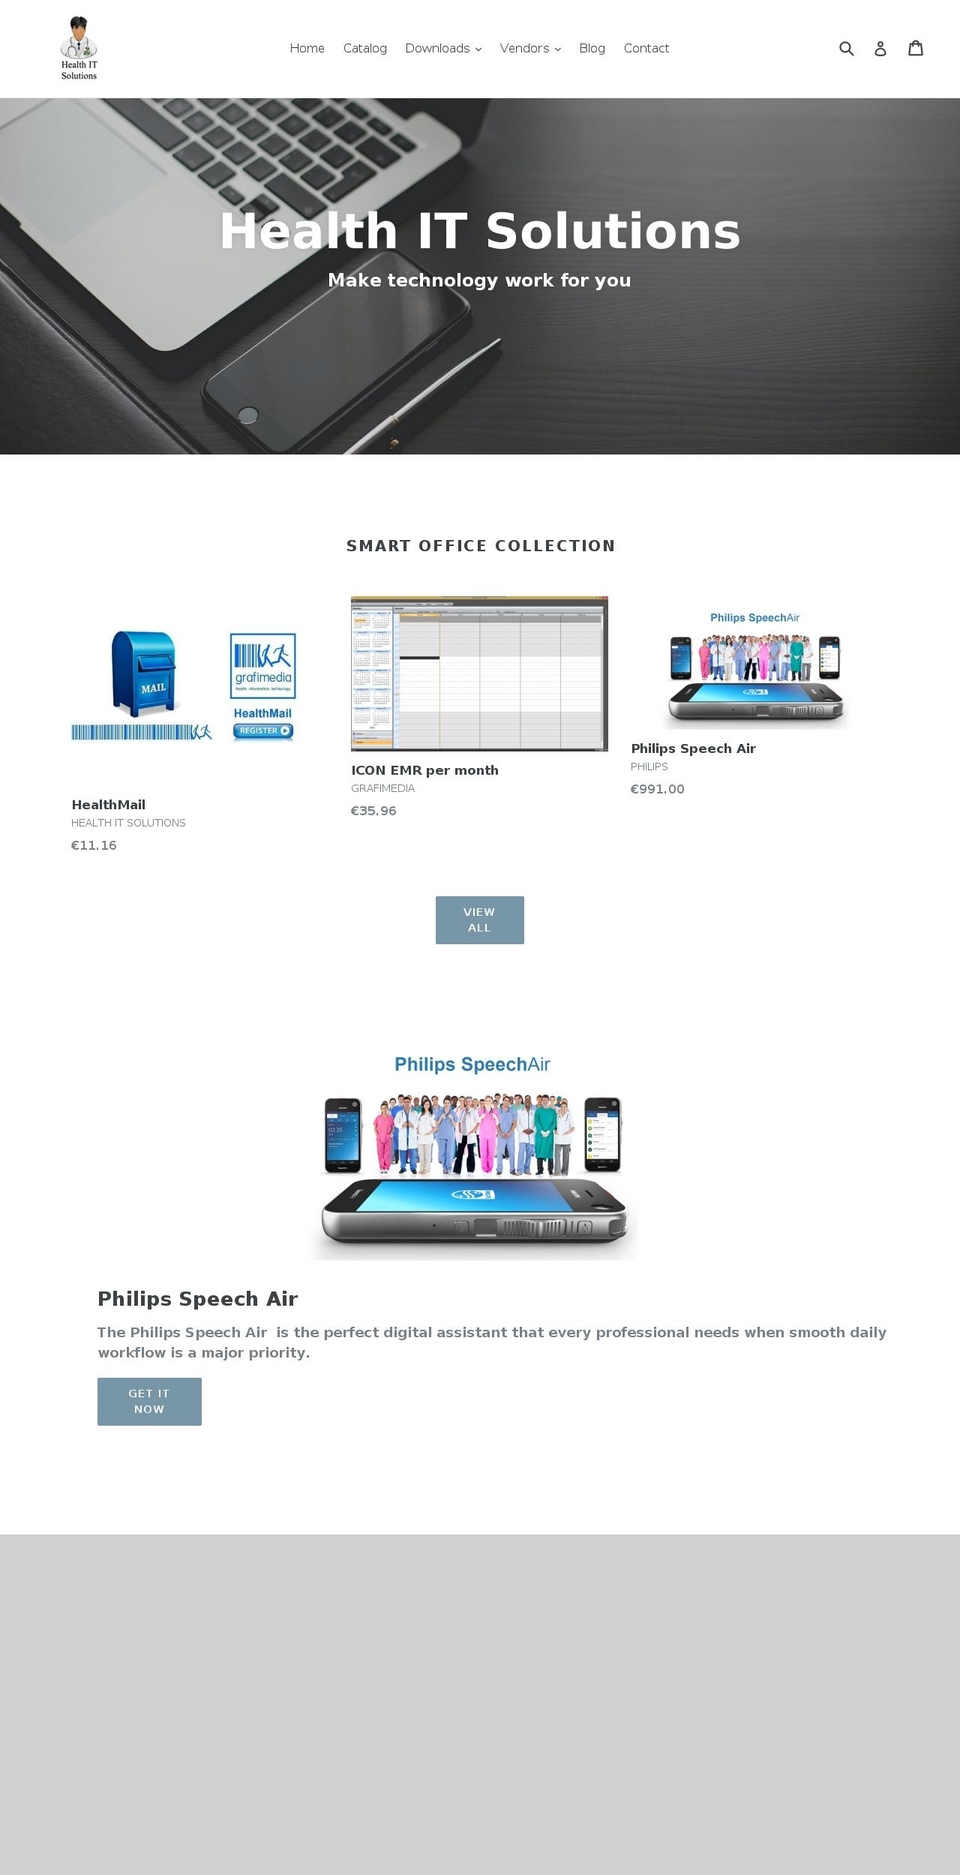 healthit-solutions.com shopify website screenshot